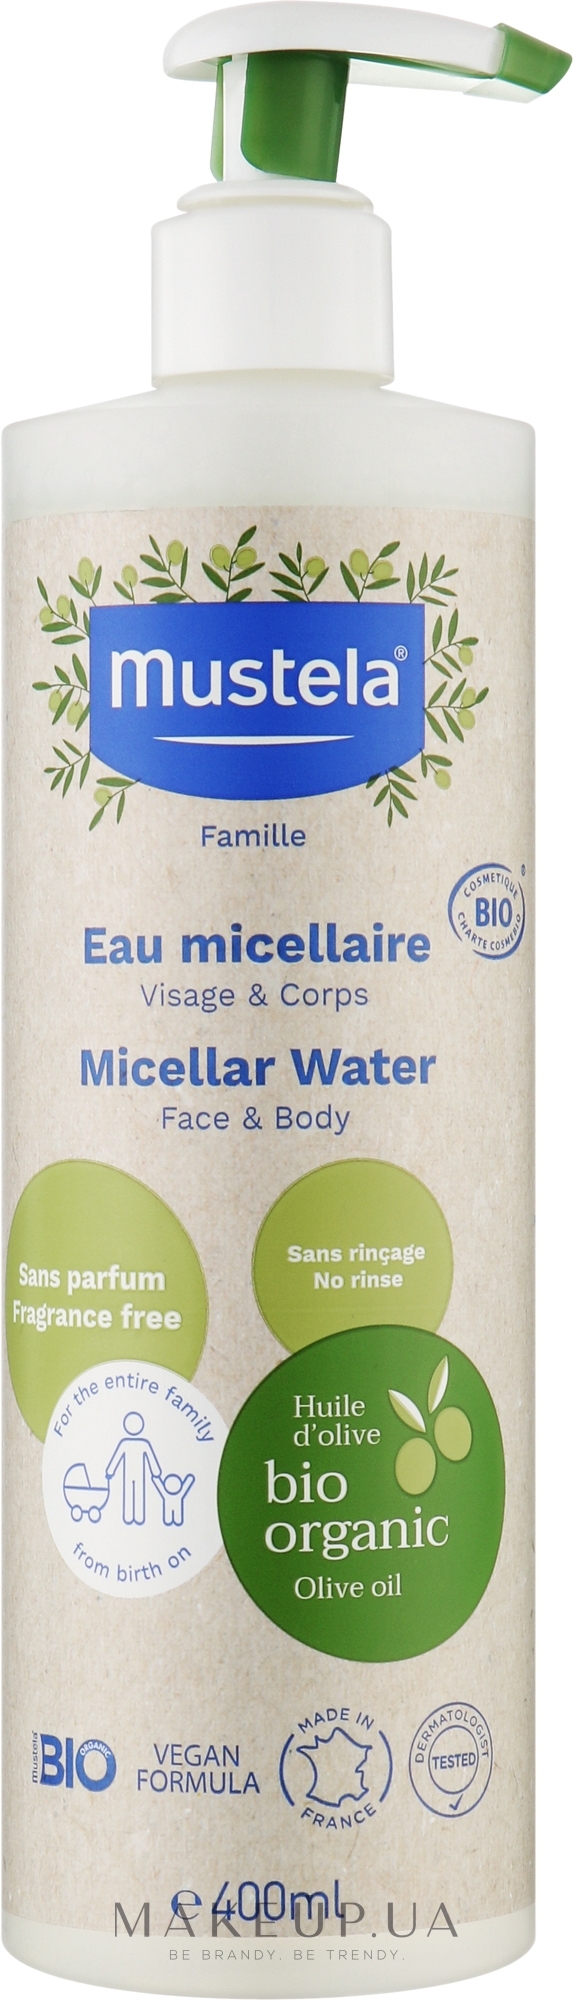 Мицеллярная вода для лица и тела - Mustela Famille Micellar Water Face & Body — фото 400ml